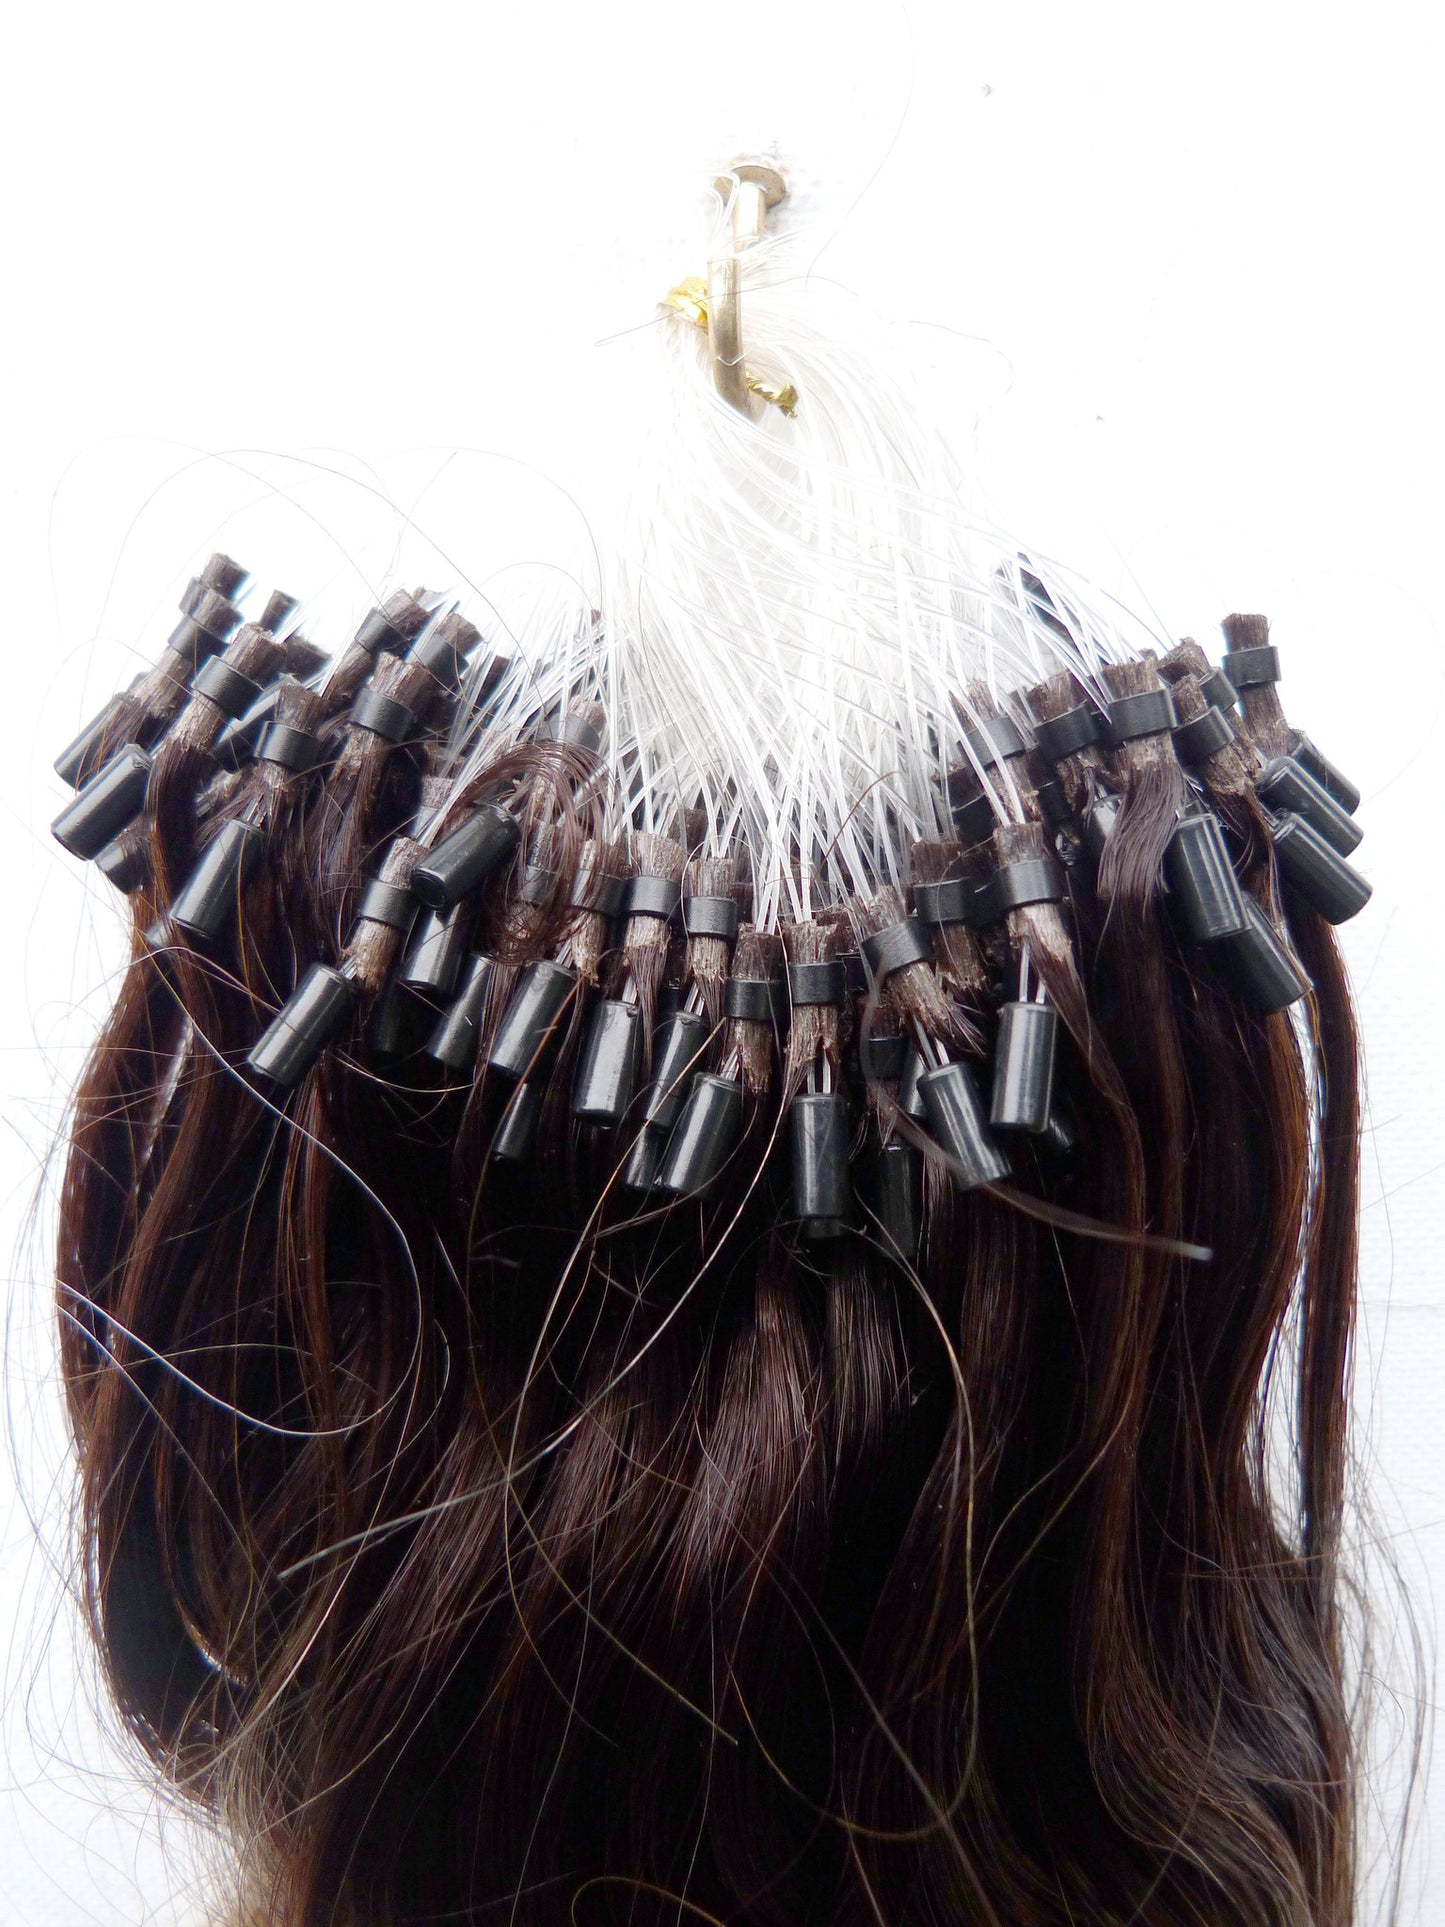 Europäische Echthaarverlängerungen – Micro-Loop-Extensions – Virgin Hair & Beauty, die besten Haarverlängerungen, echtes Echthaar.